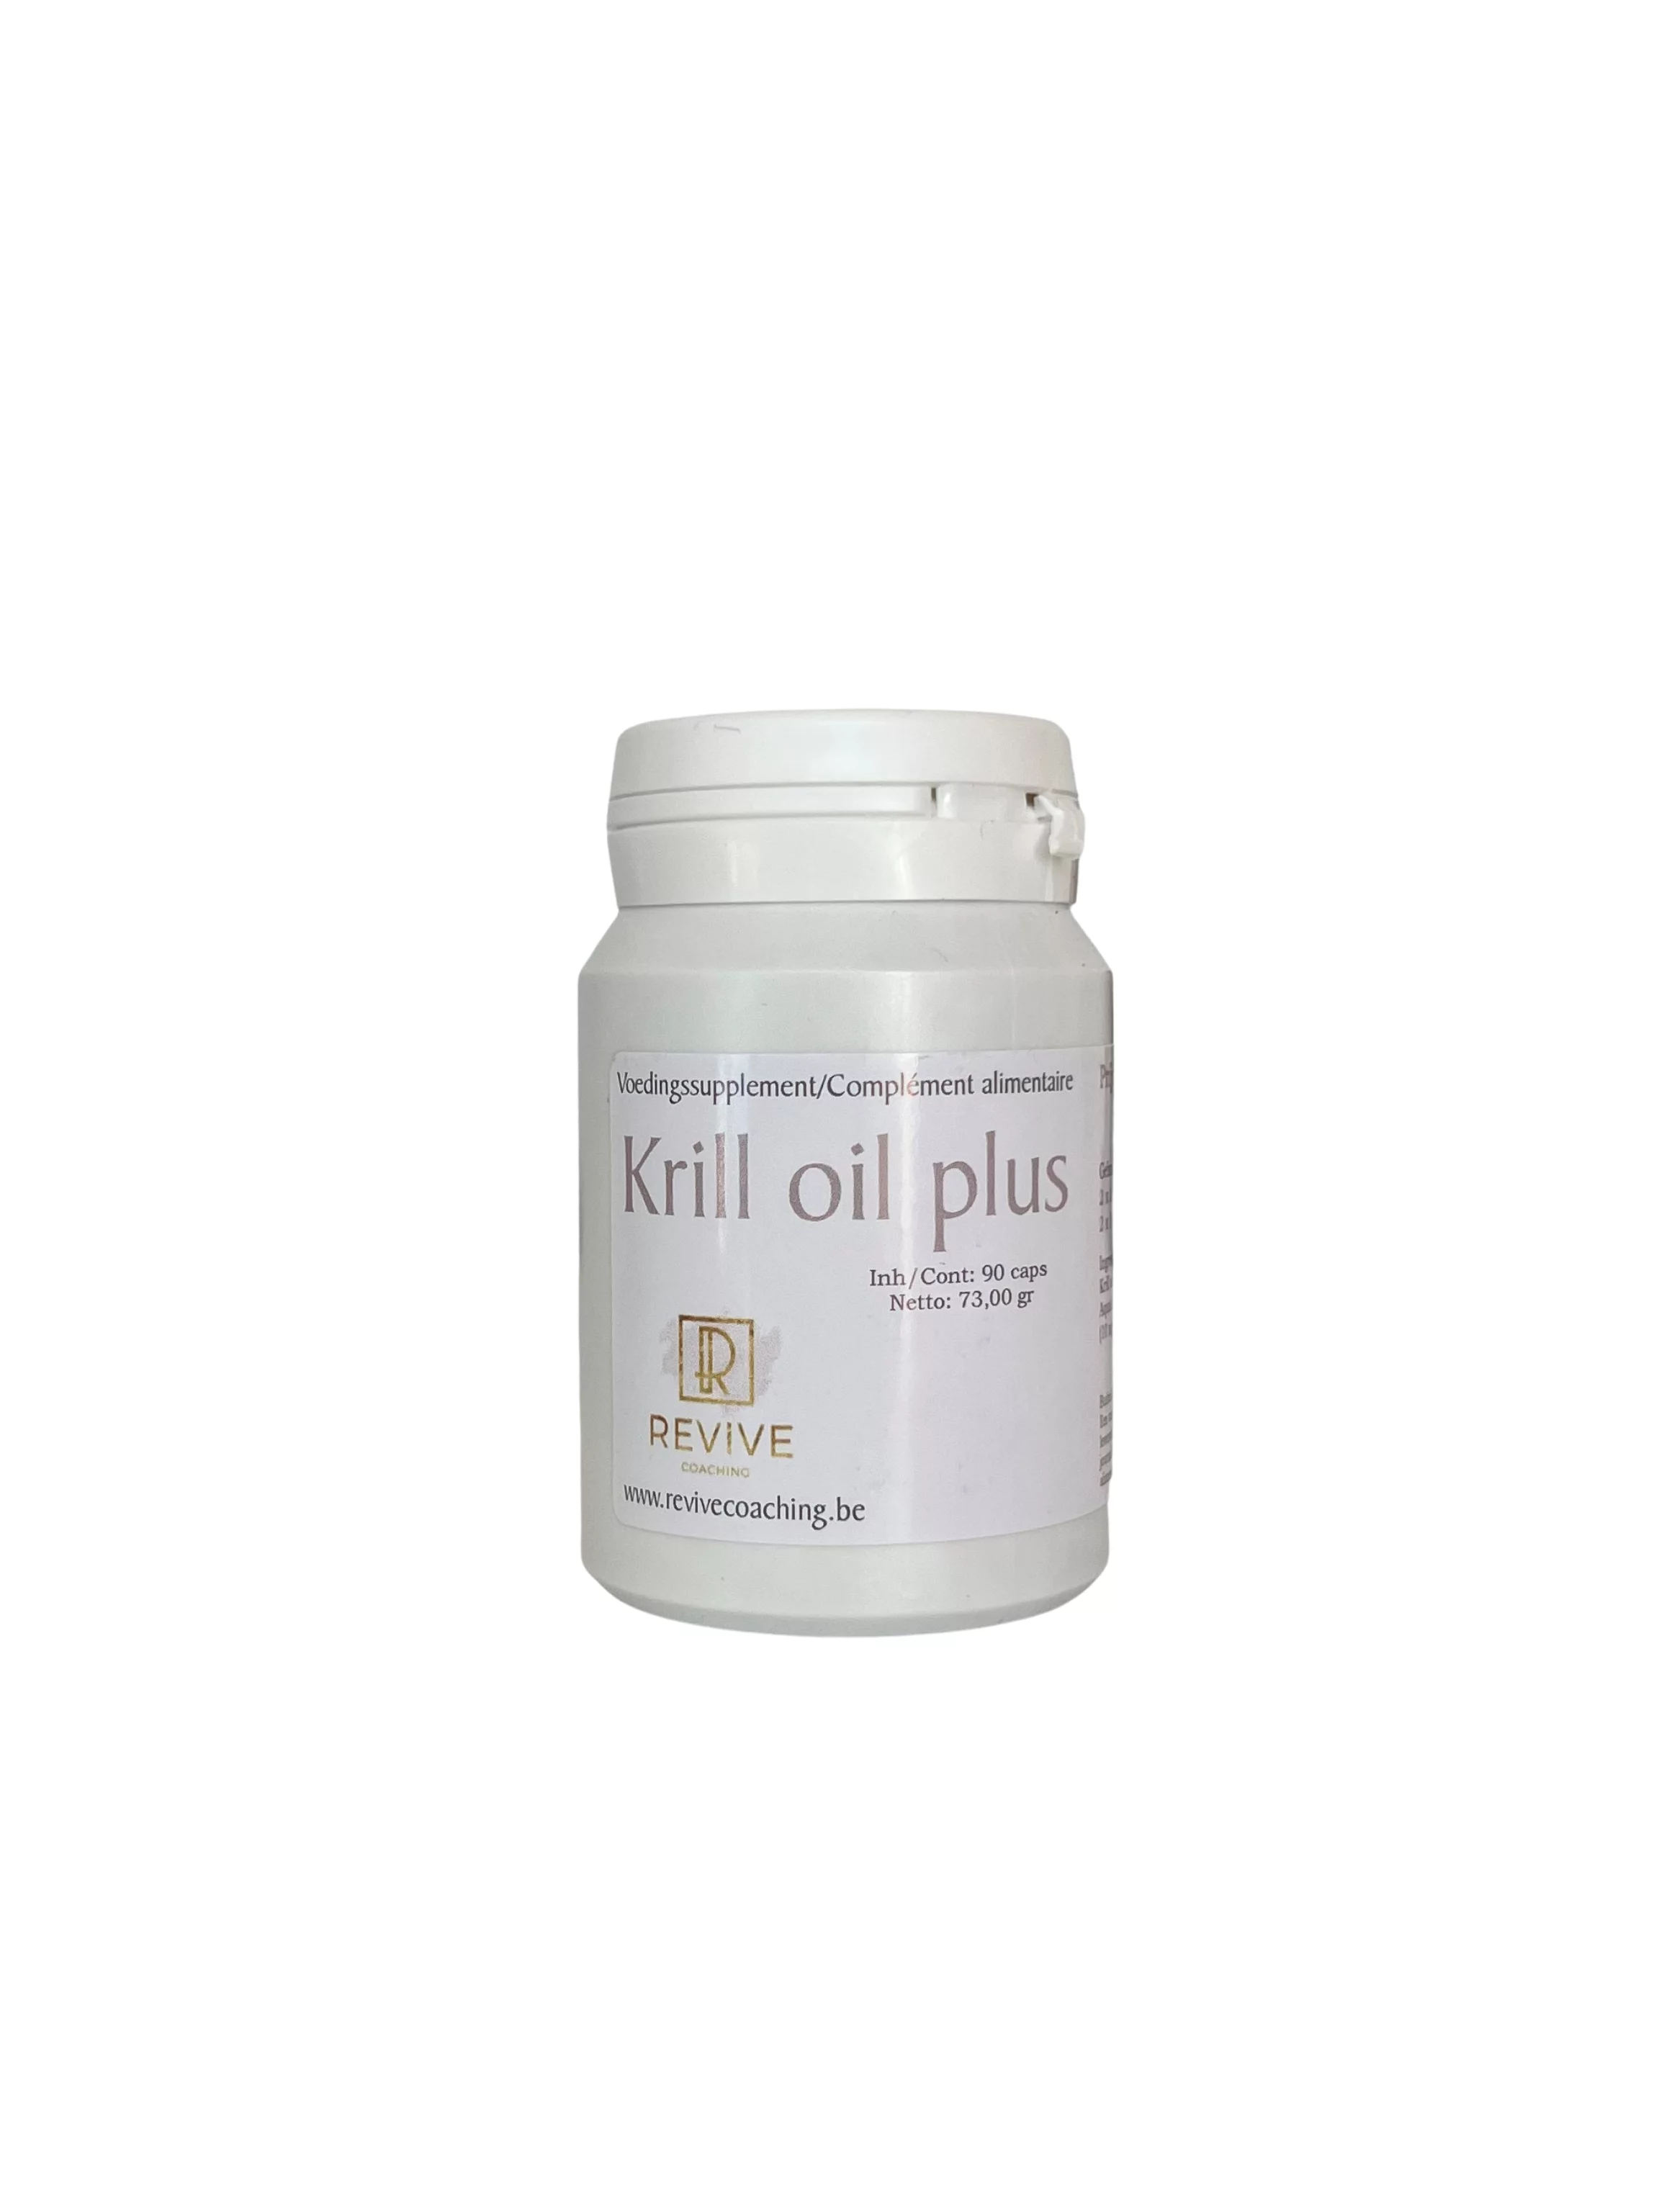 Revive Krill oil plus - 90 caps